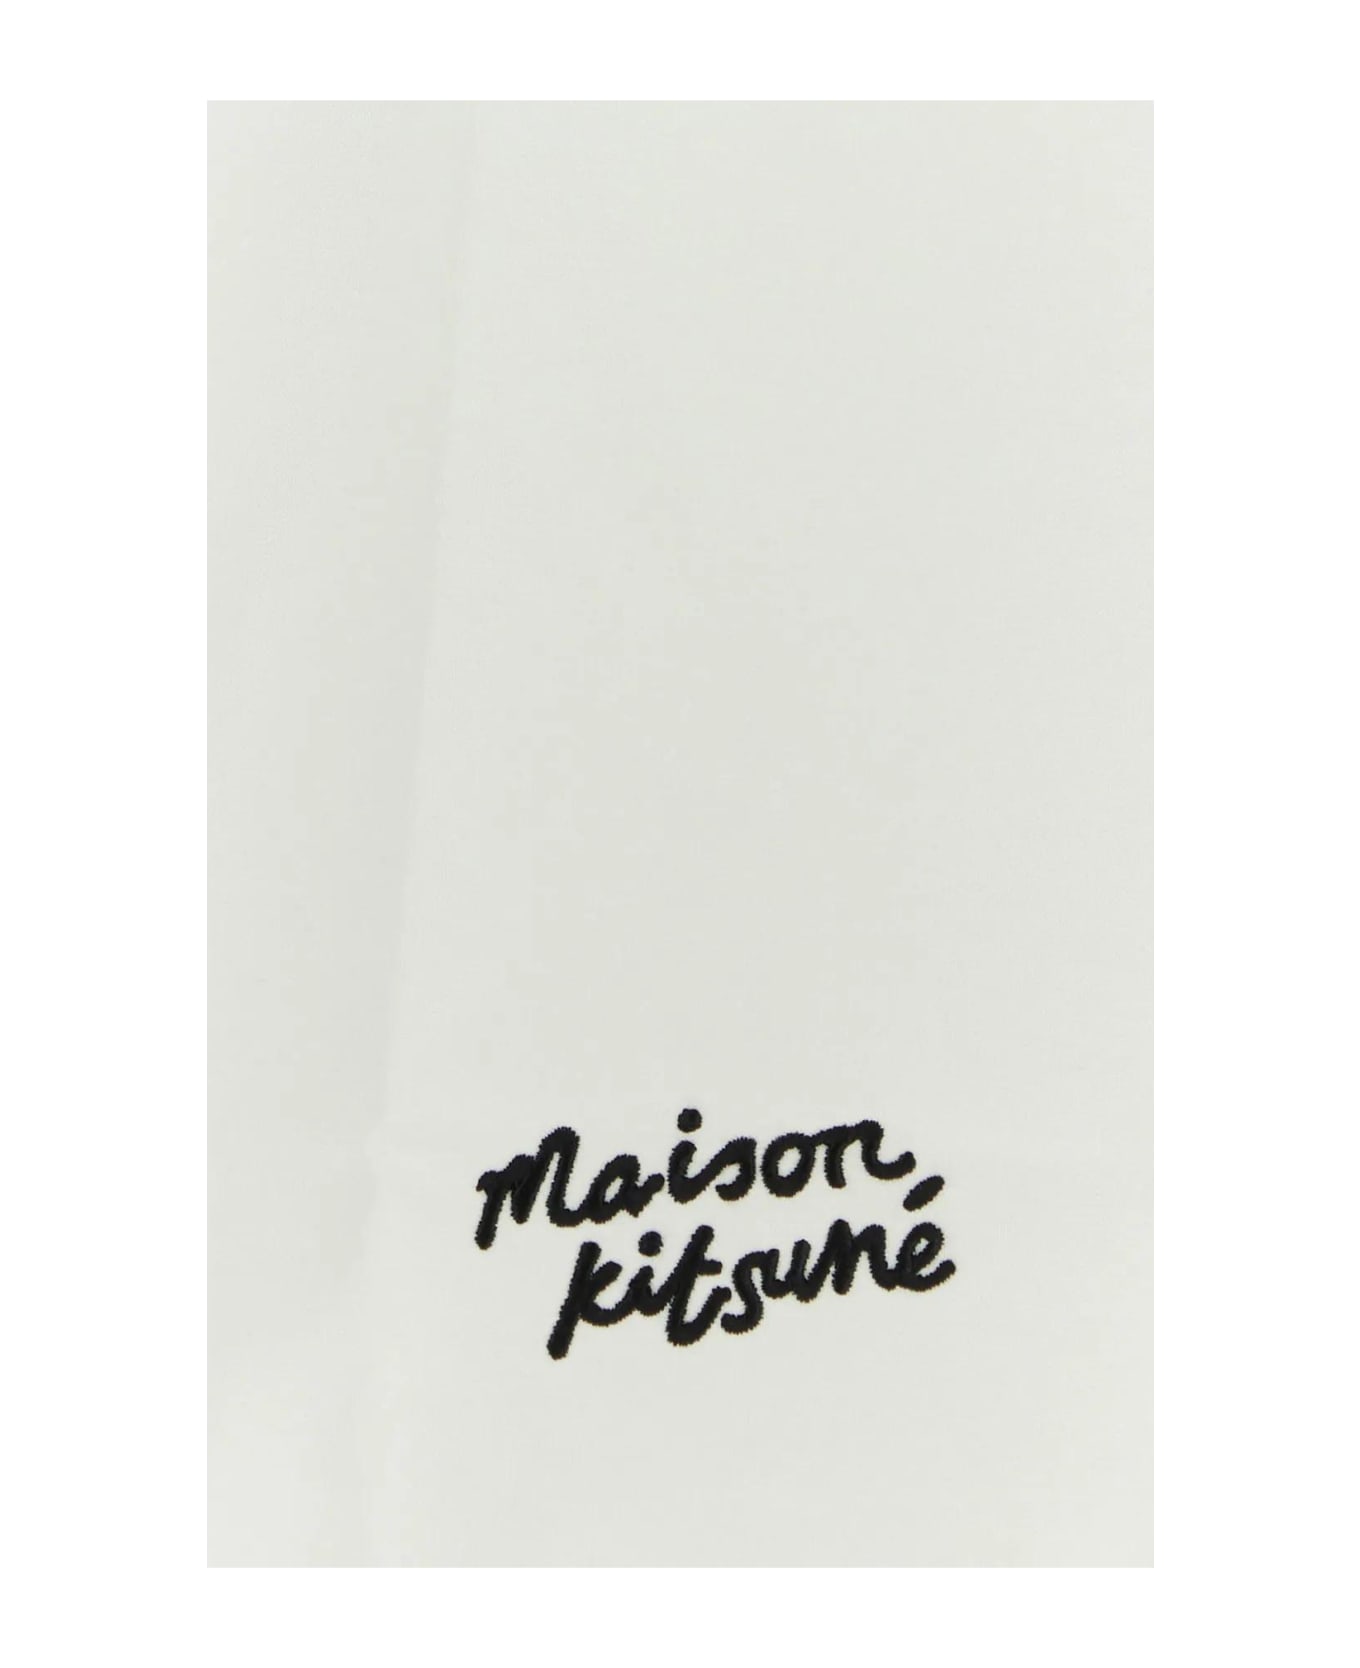 Maison Kitsuné White Cotton Shirt - Nero